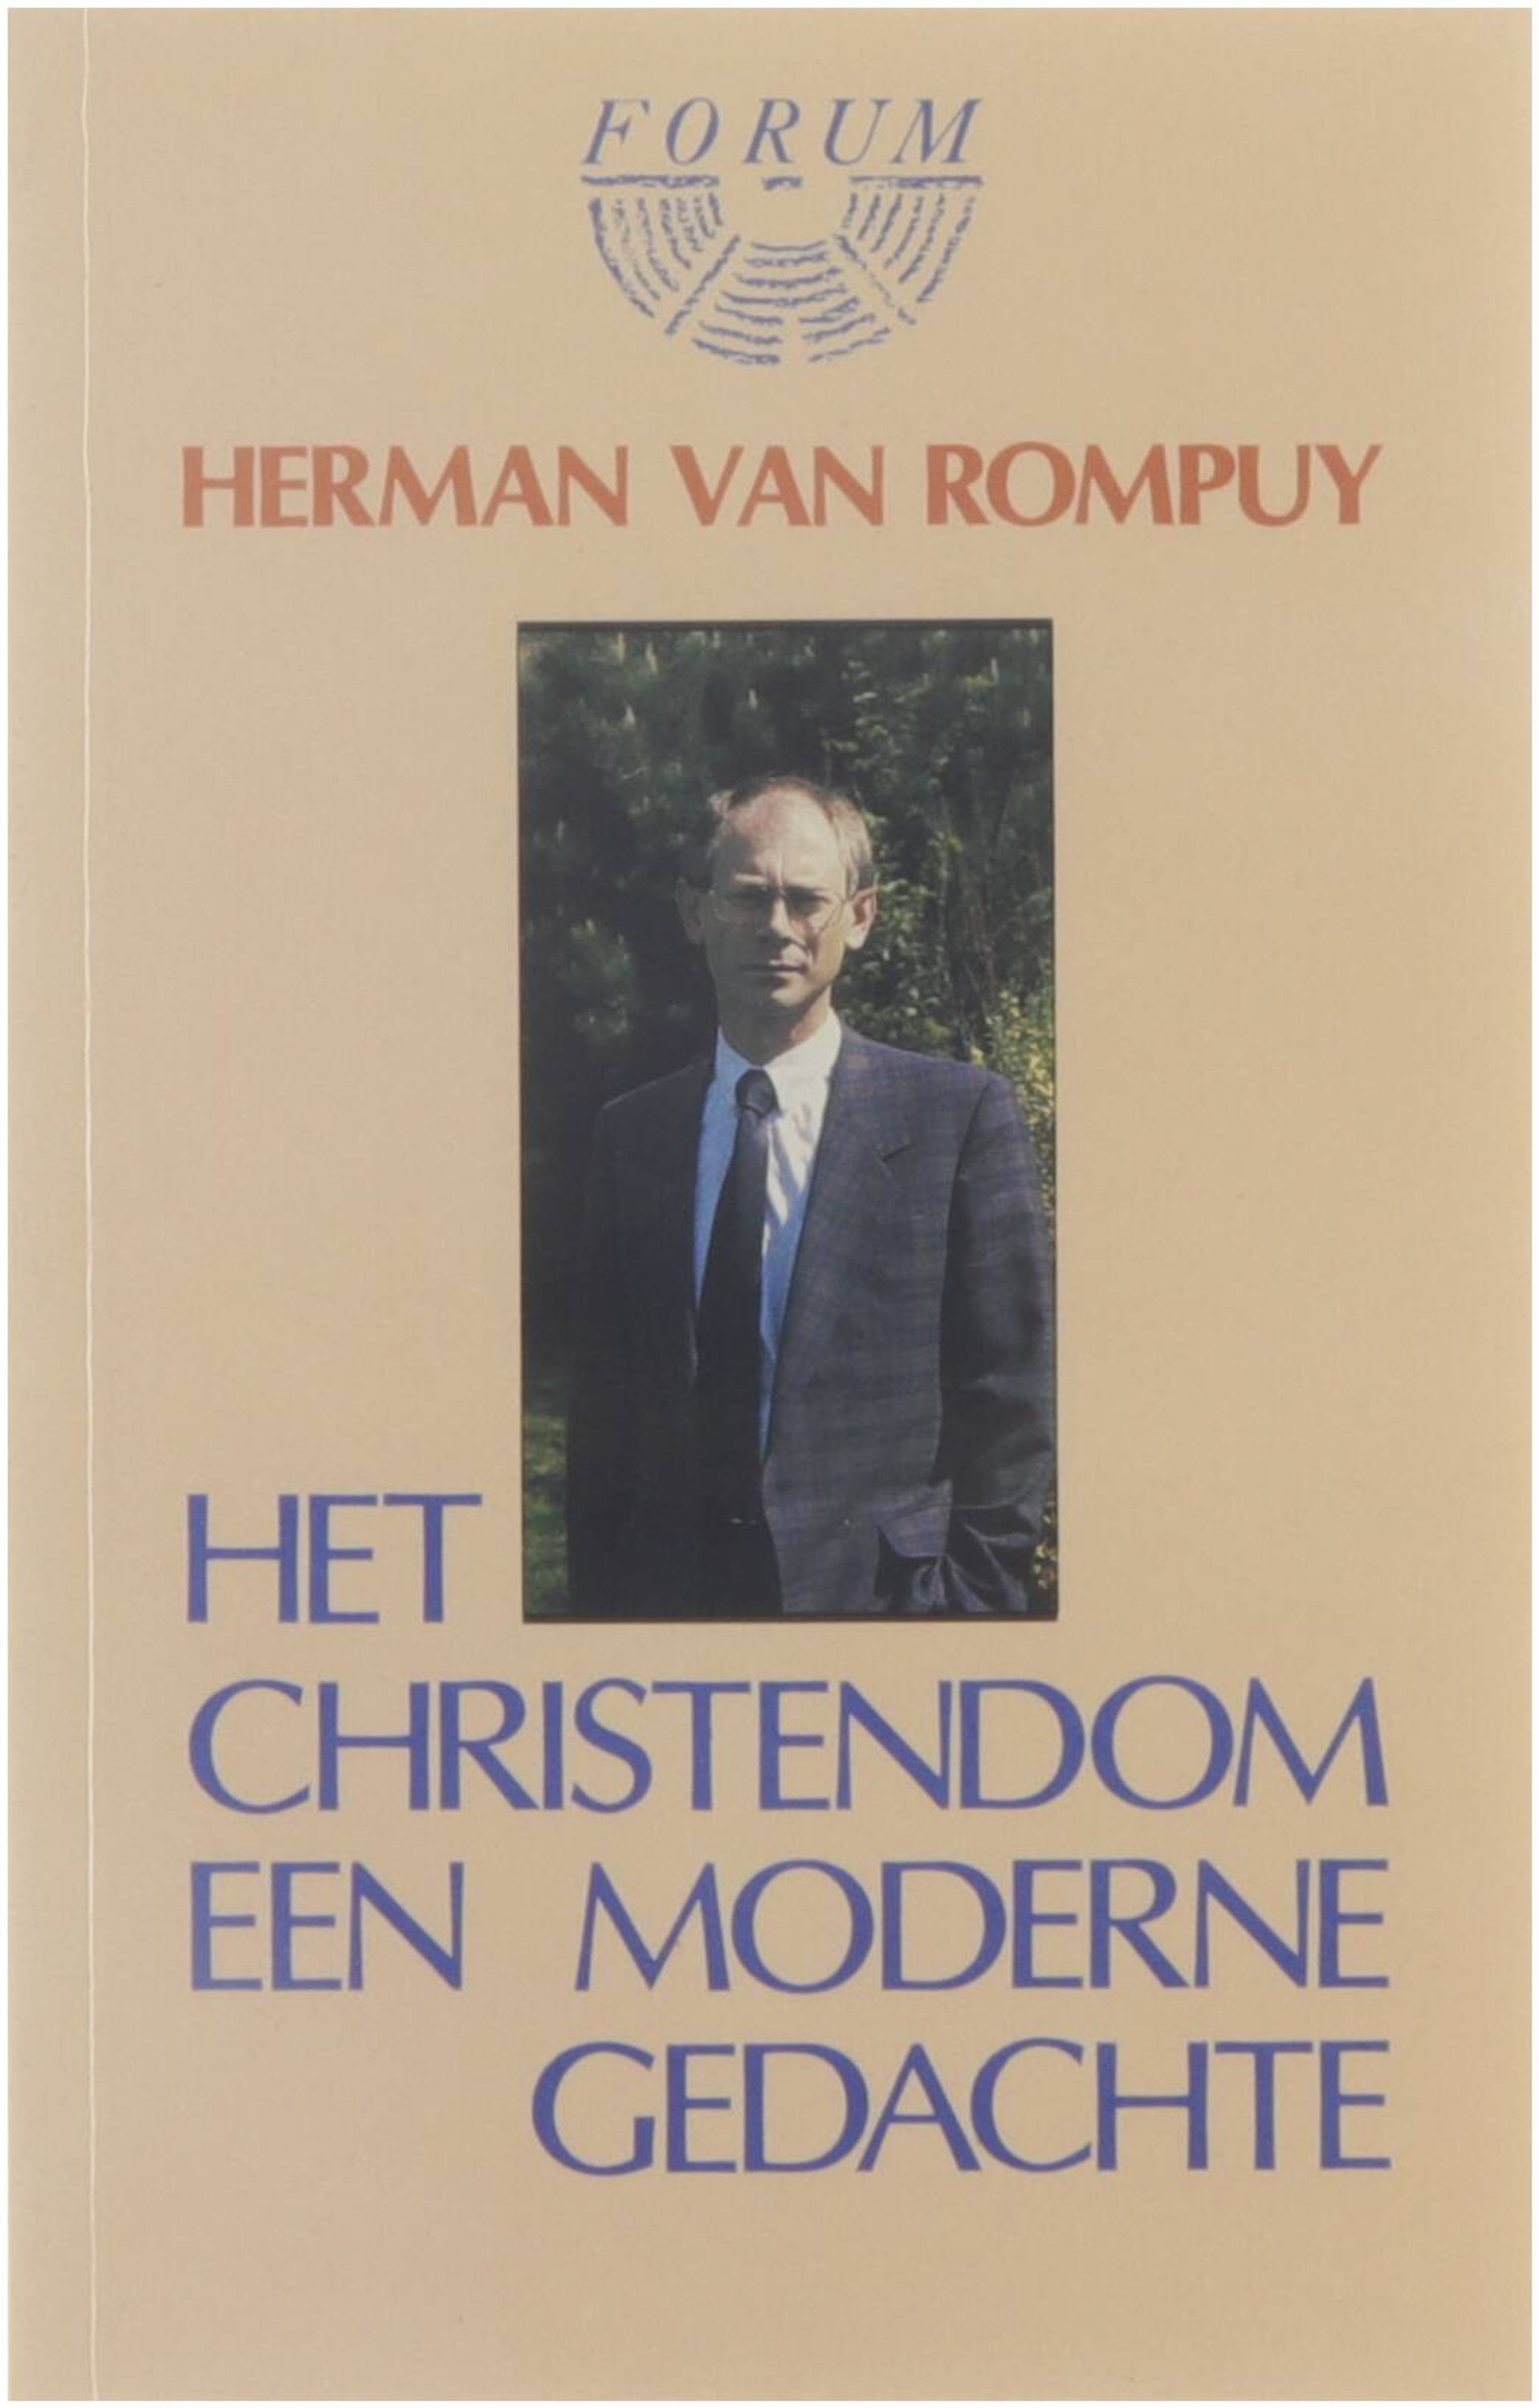 Forum (Louvain, Belgium), nr. 2.: Het christendom, een moderne gedachte. - Herman van Rompuy